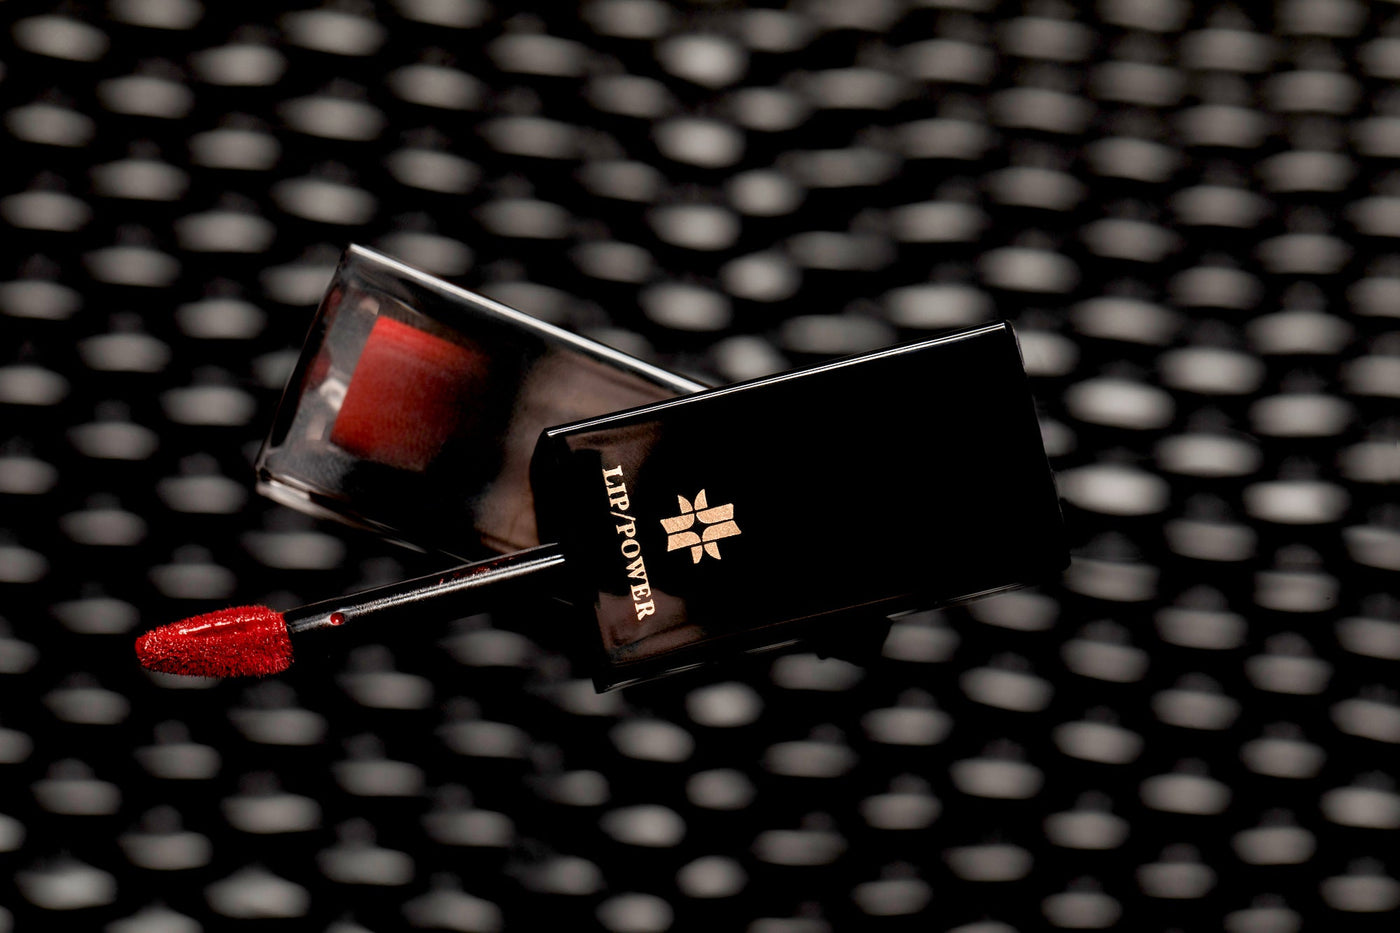 LIP/POWER | The Bold Matte Liquid Lipstick